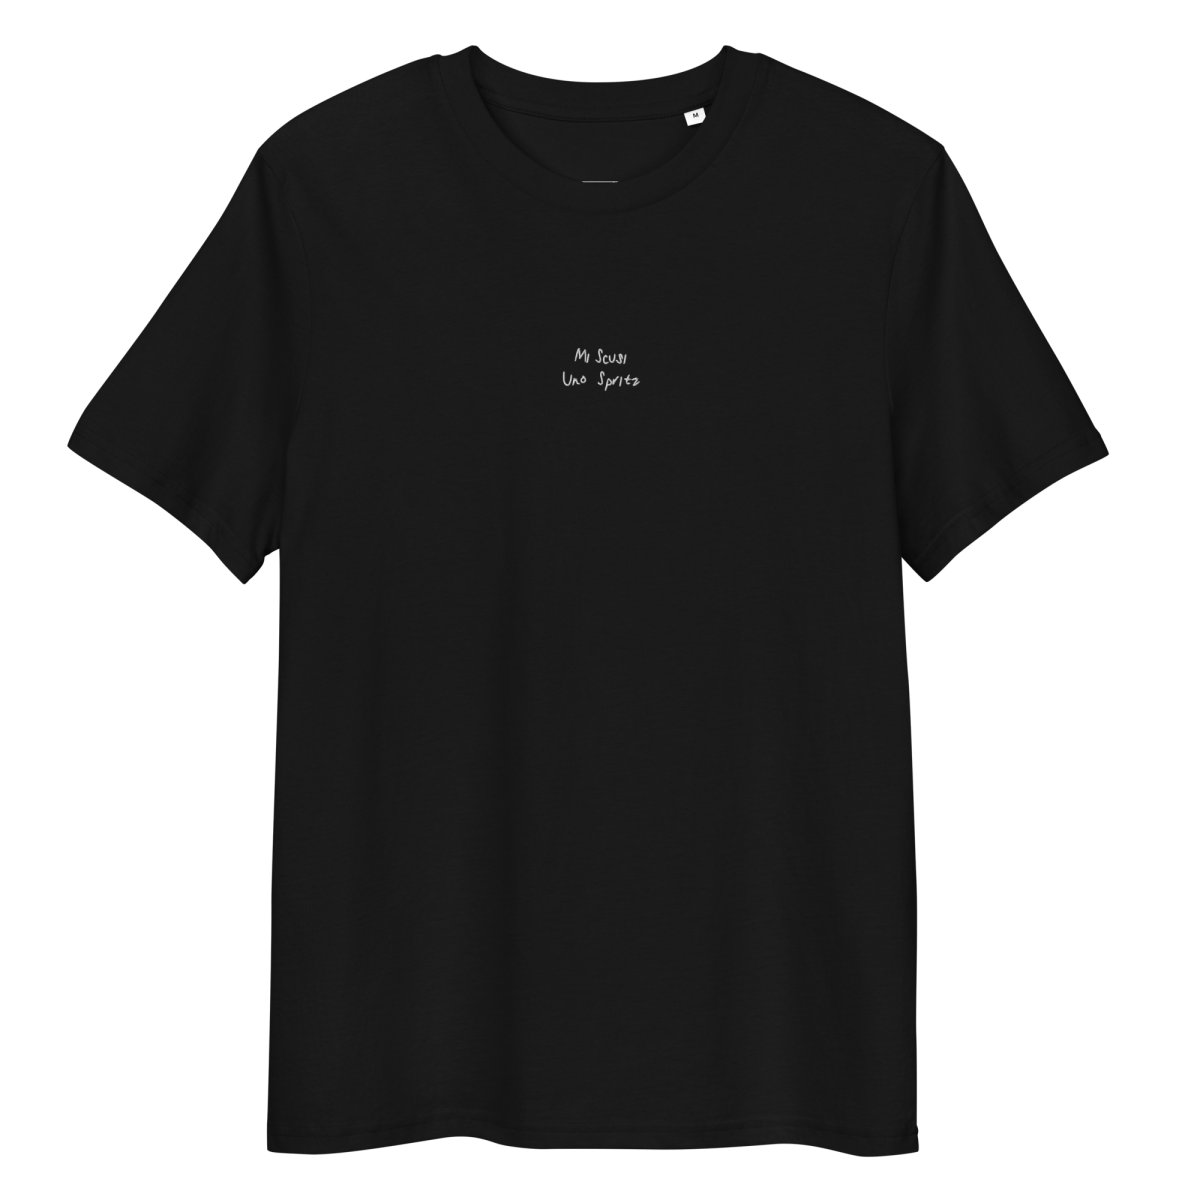 The Scusi Spritz organic t-shirt